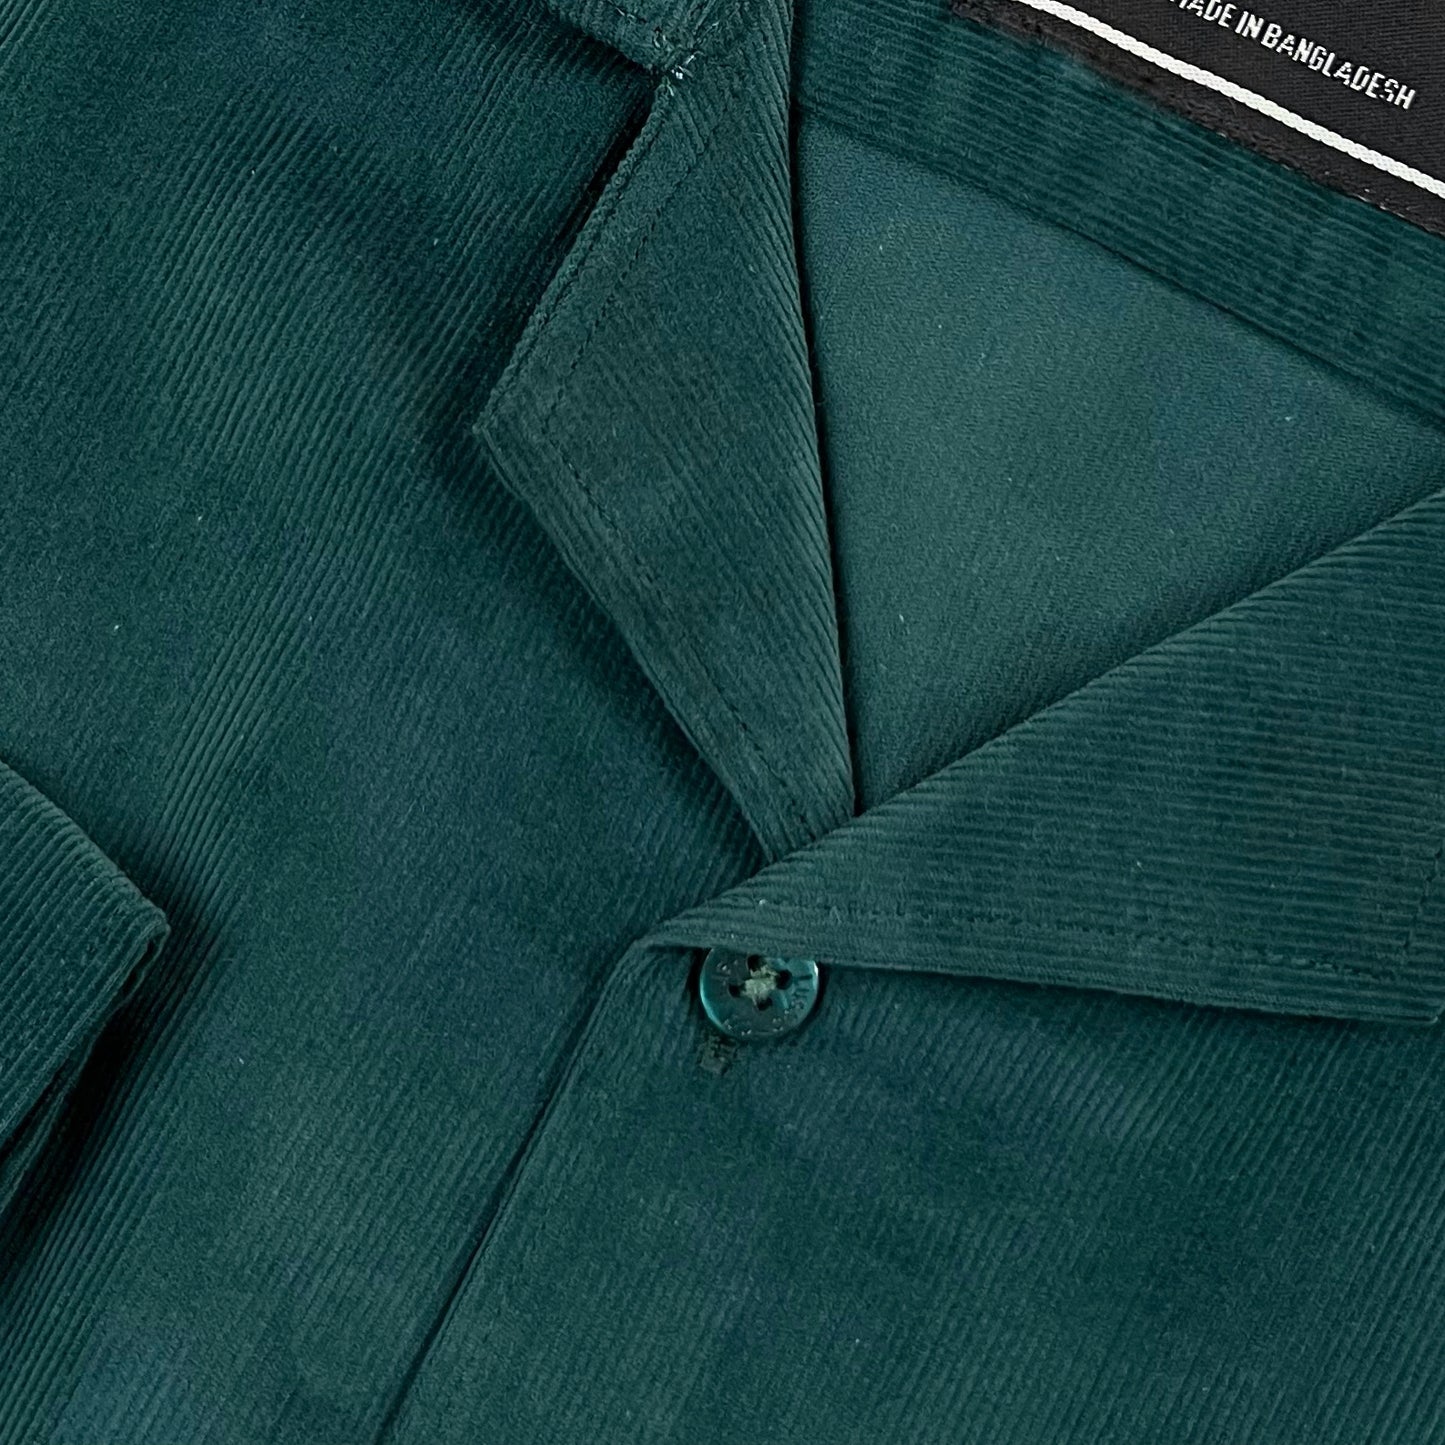 Corduroy Shirt by Lussotica – FSS LU980 – Full Sleeve/Unisex